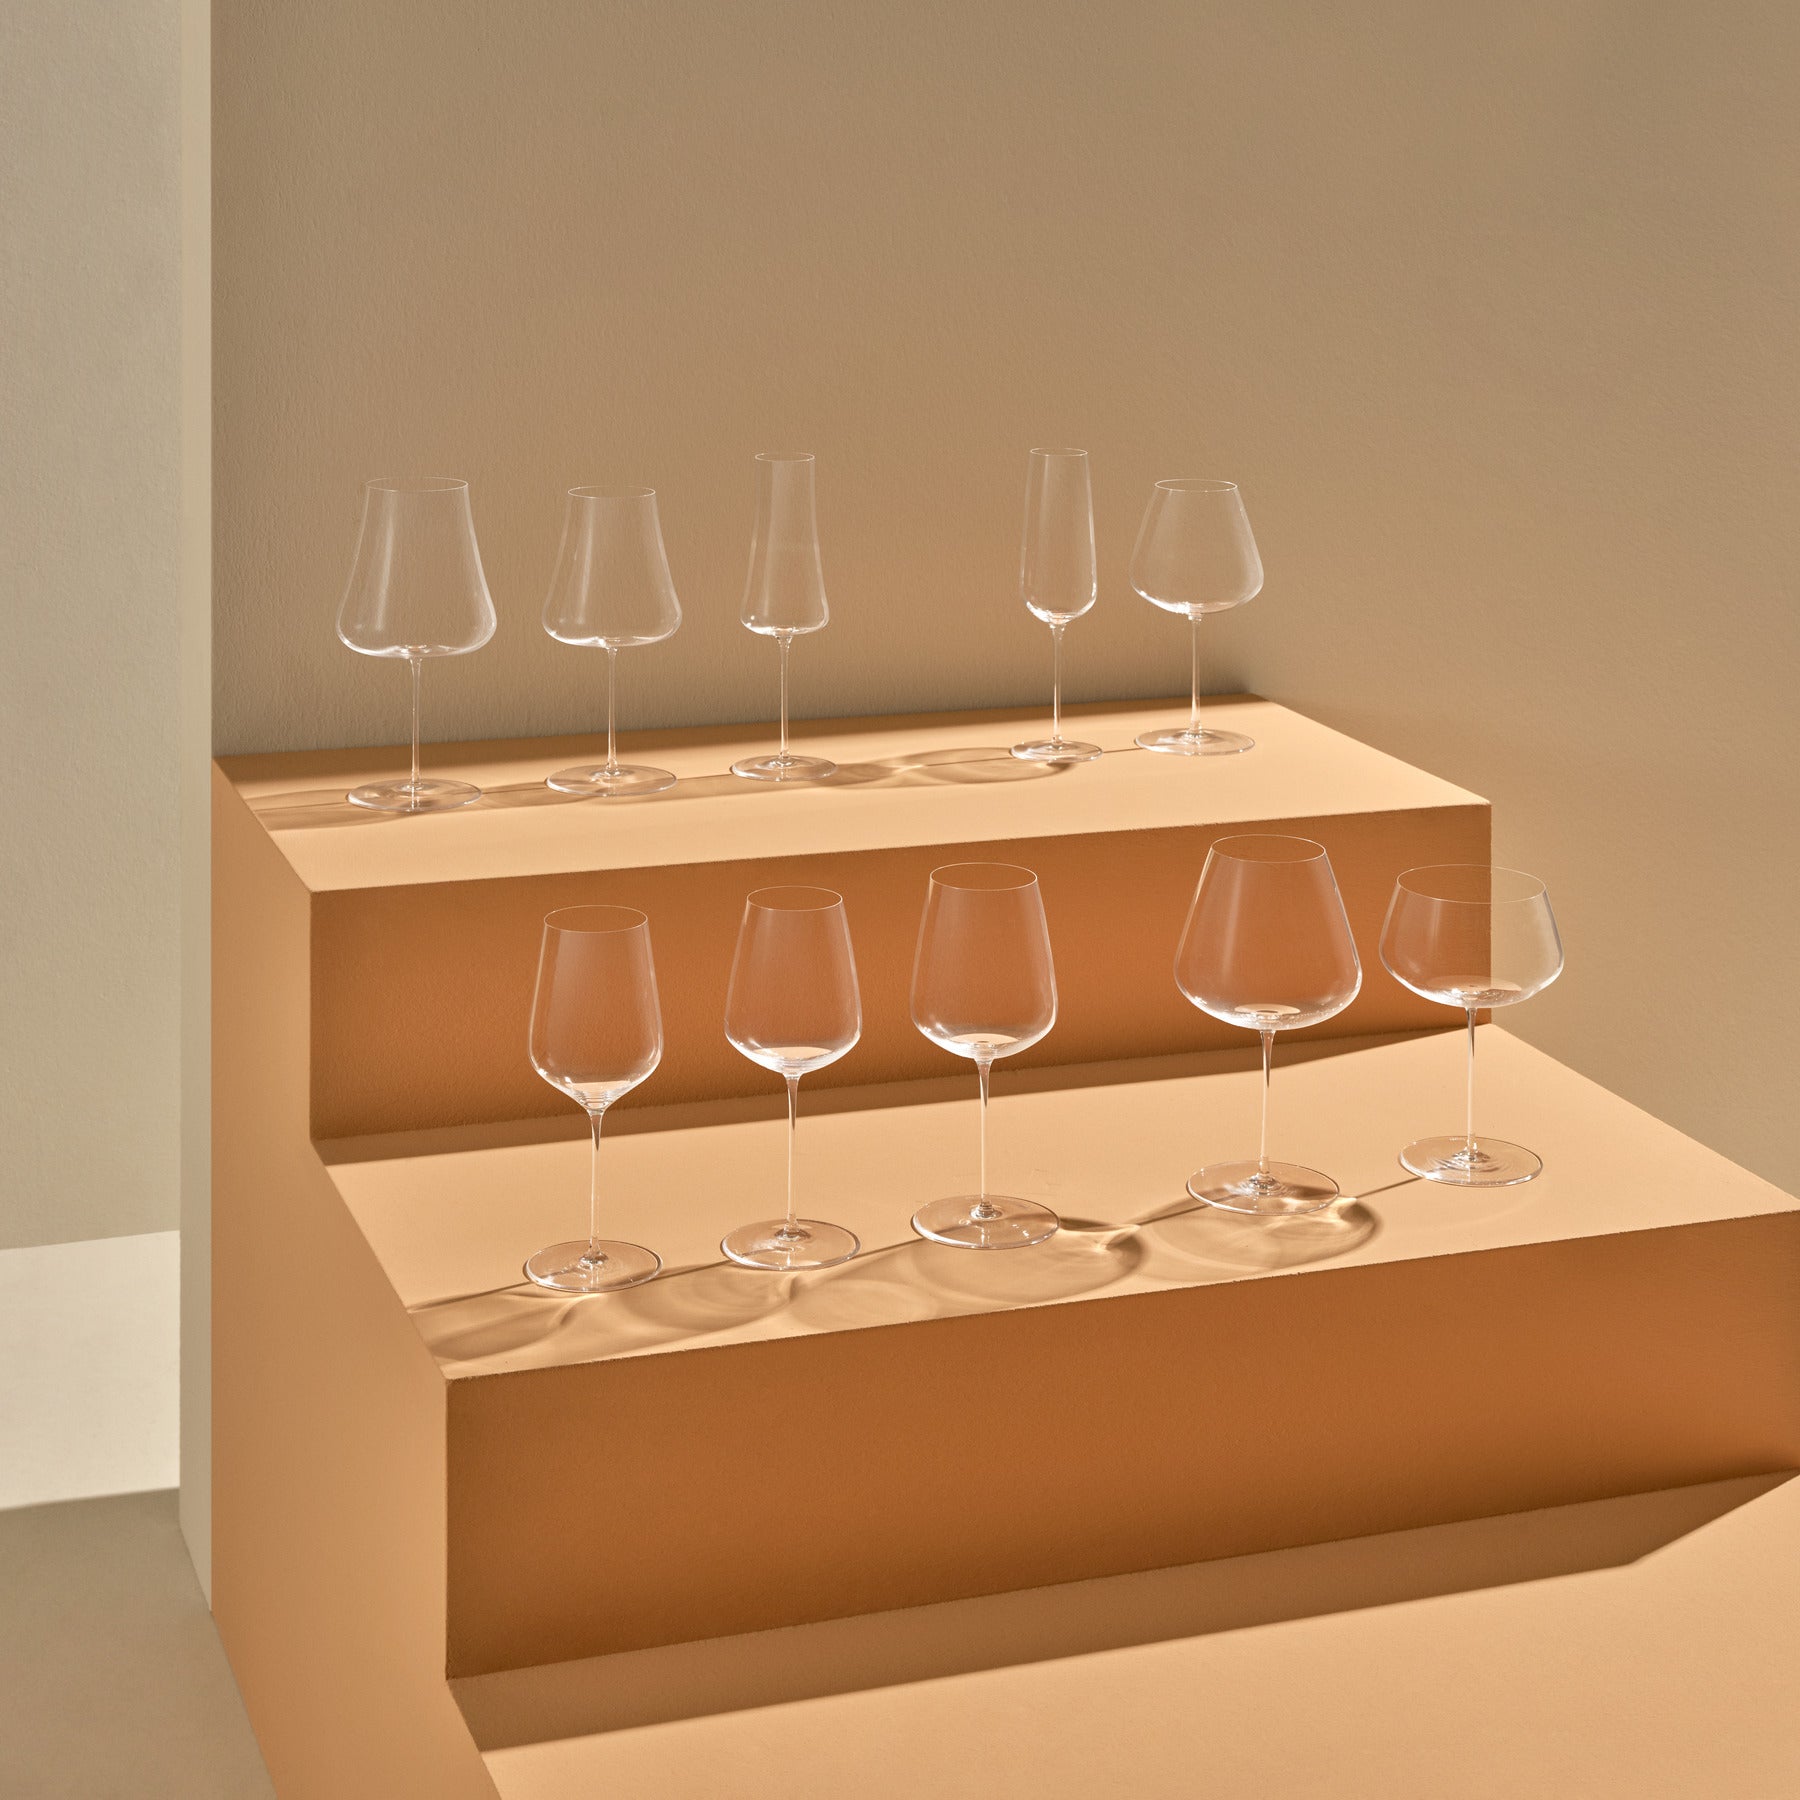 Maestro 12 oz. Stemmed Wine Glassware Set of 4